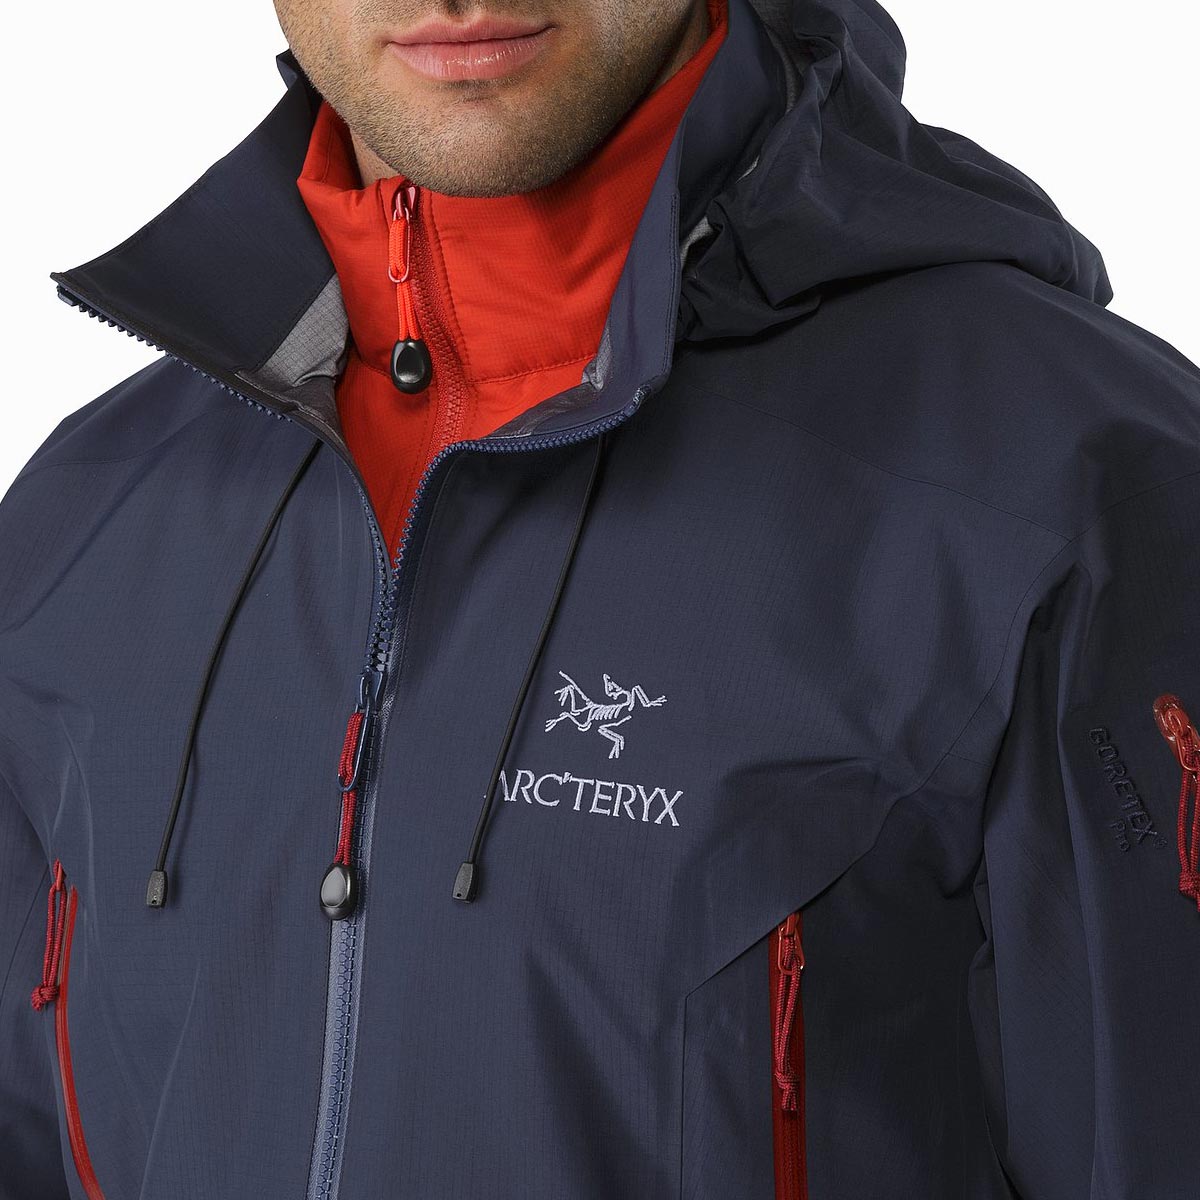 Arc'teryx Theta AR Jacket, men's, discontinued Fall 2017 model 